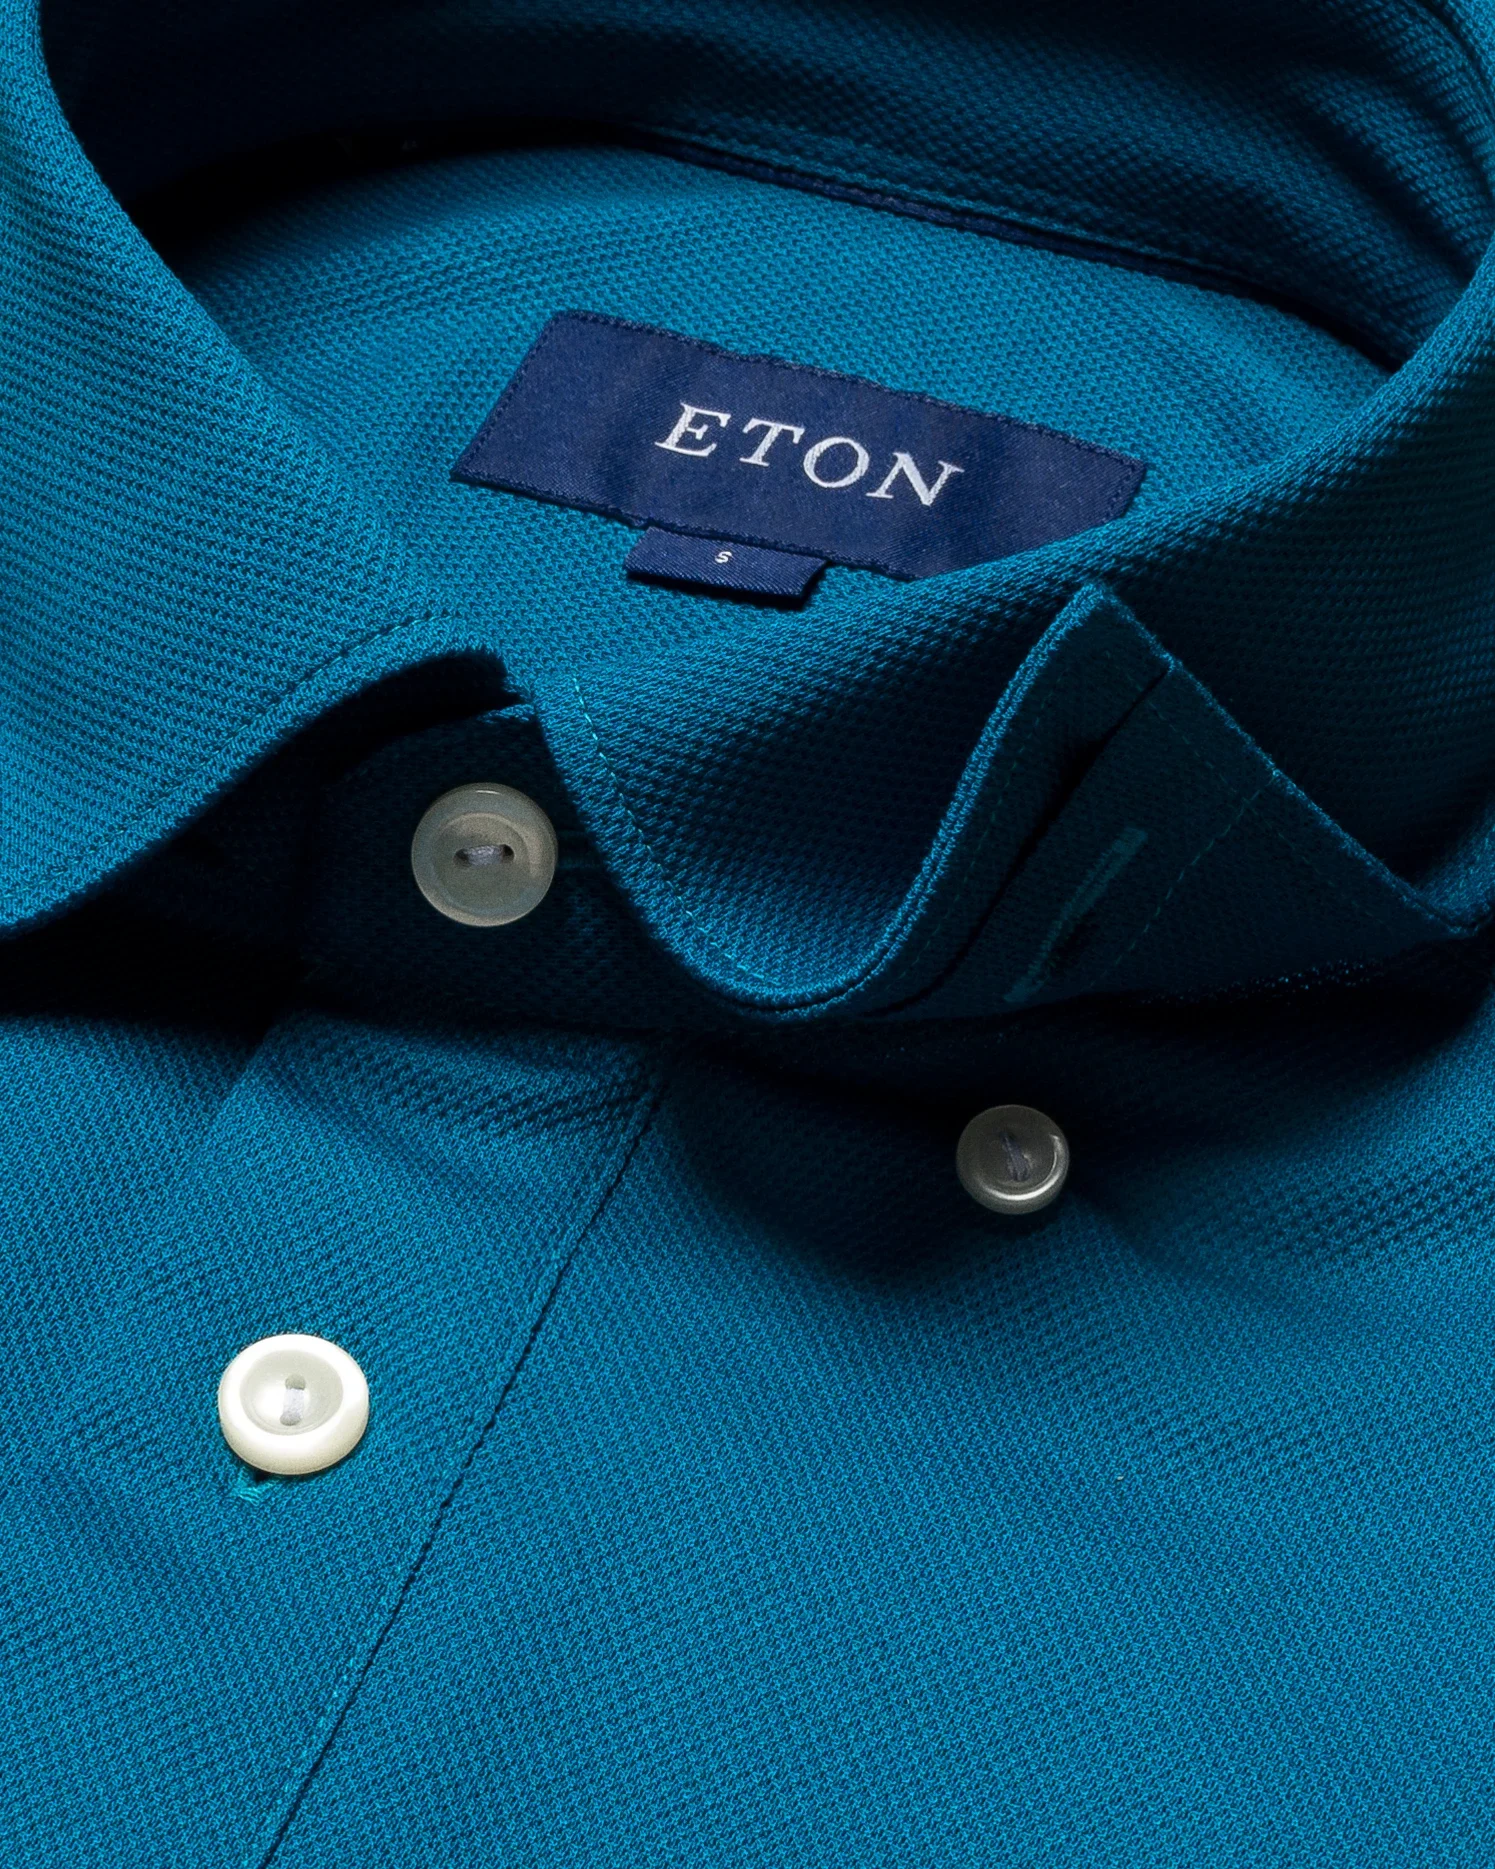 Eton - teal polo shirt long sleeved